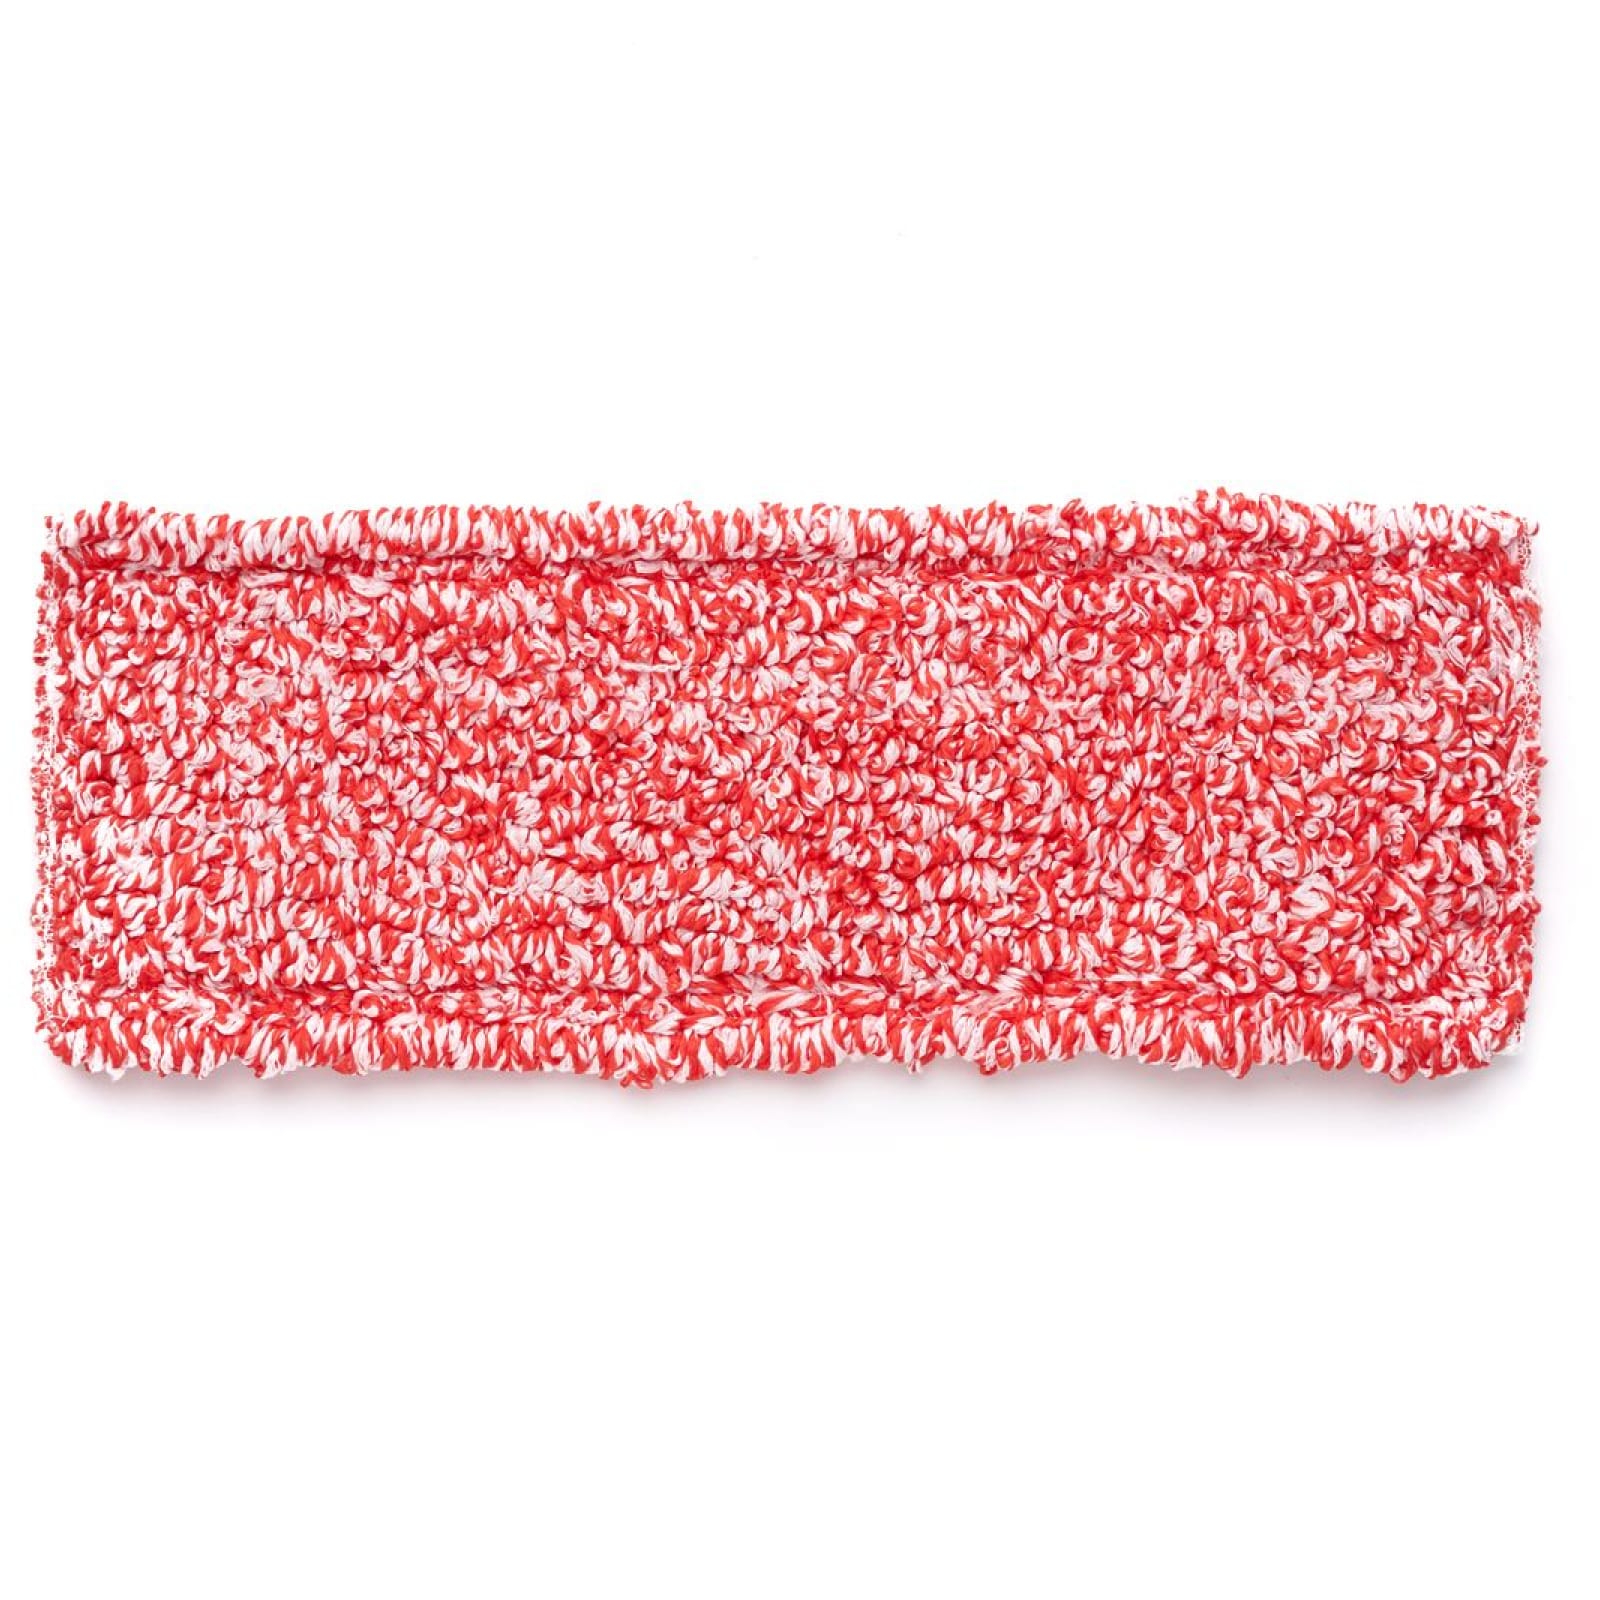 Насадка для швабры CISNE липучка, плоская, микрофибра, красно-белая, 40 см насадка для плоской швабры арт 5386763 41×12 см микрофибра серый